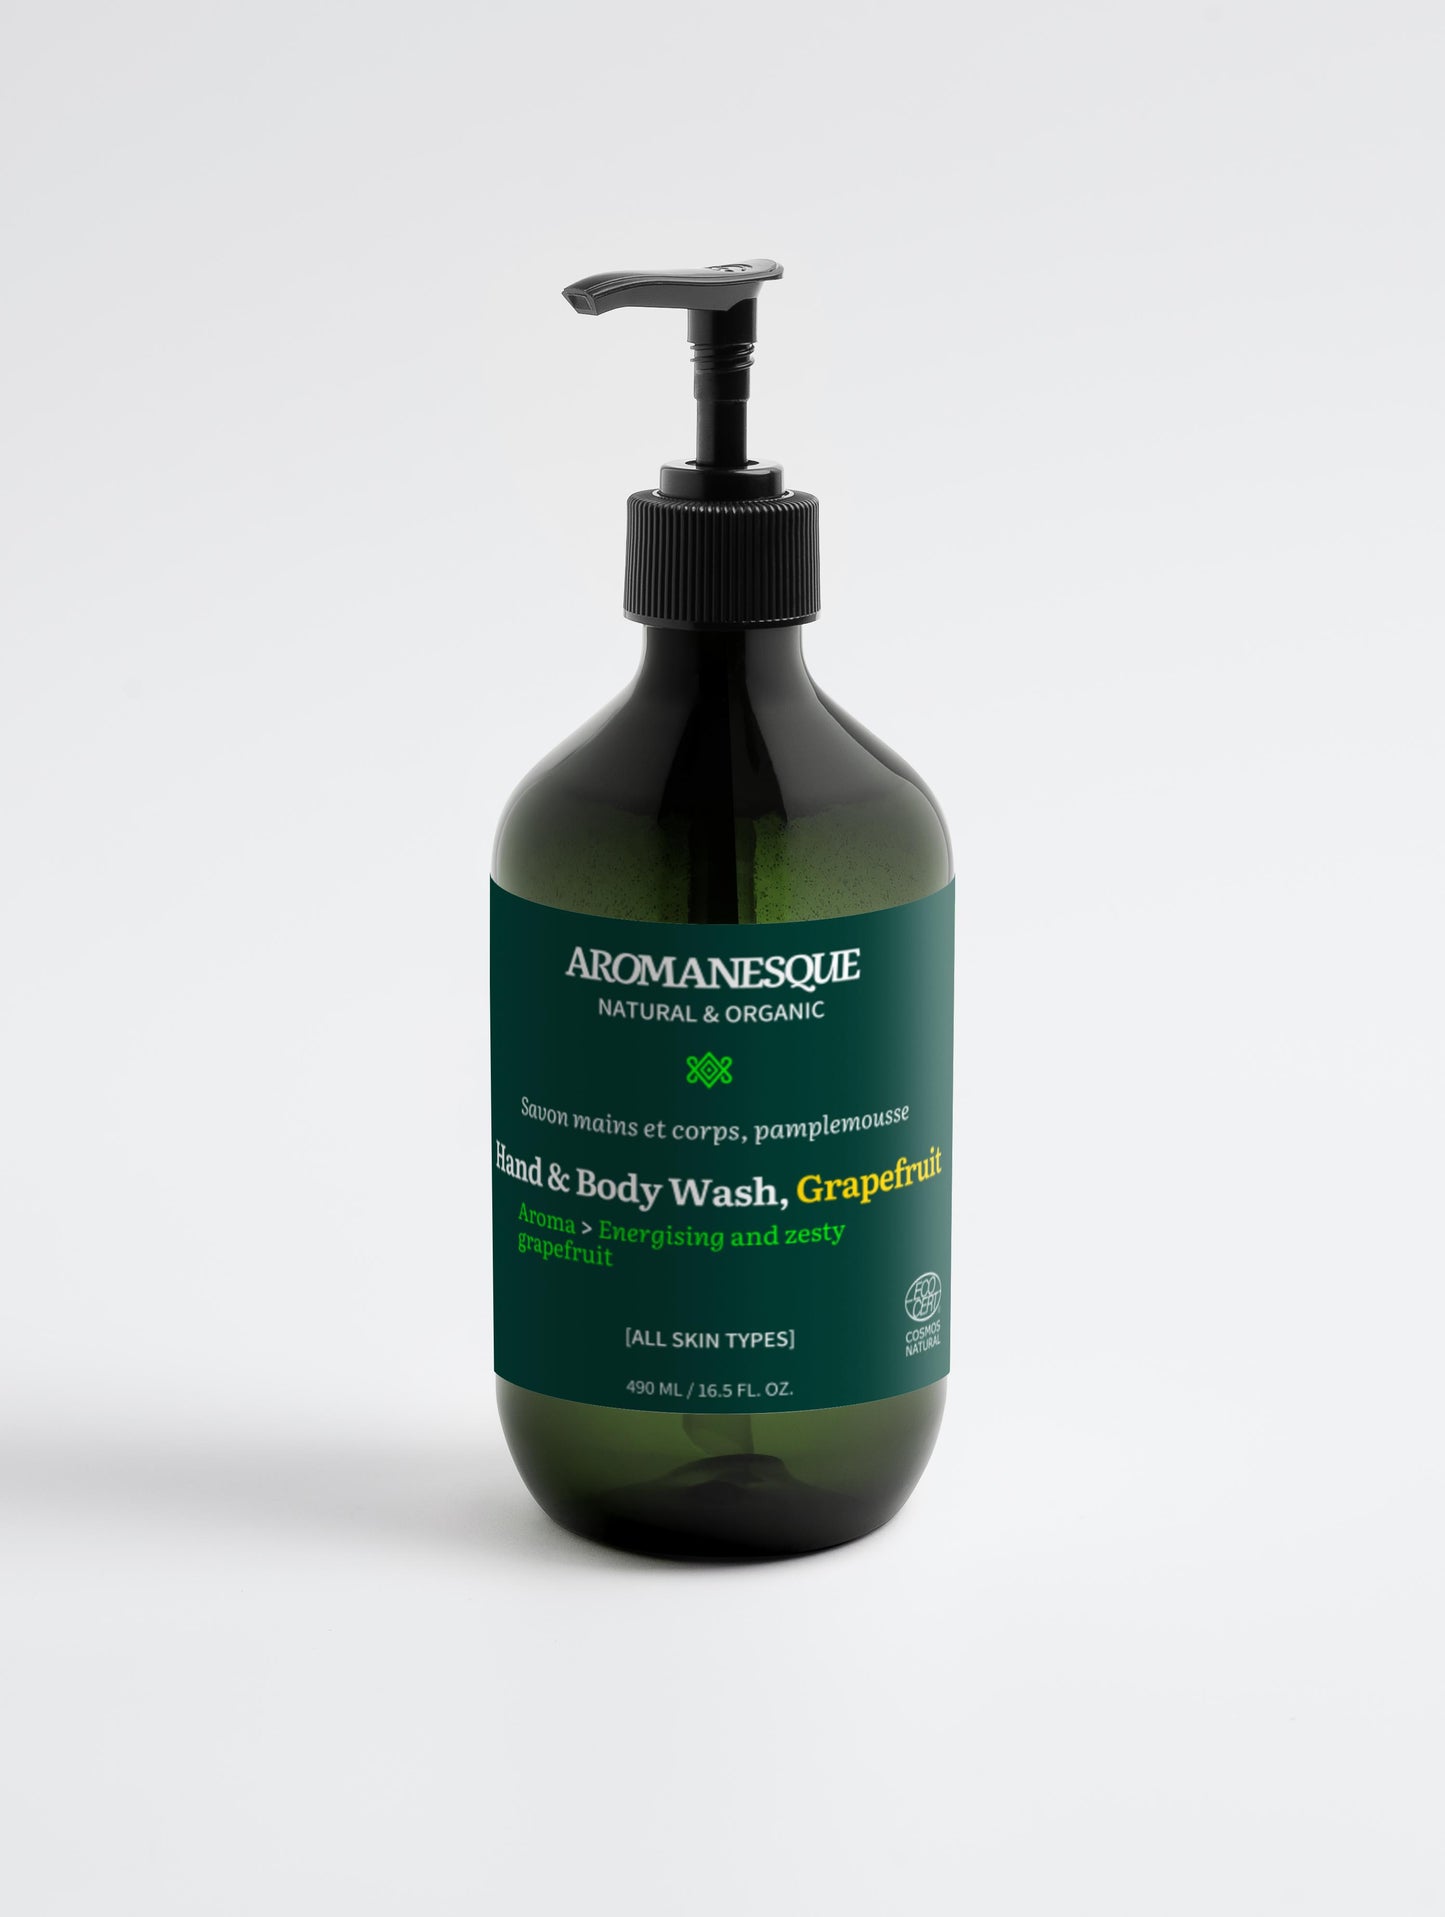 Aromanesque Hand & Body Wash, Grapefruit - 490Ml